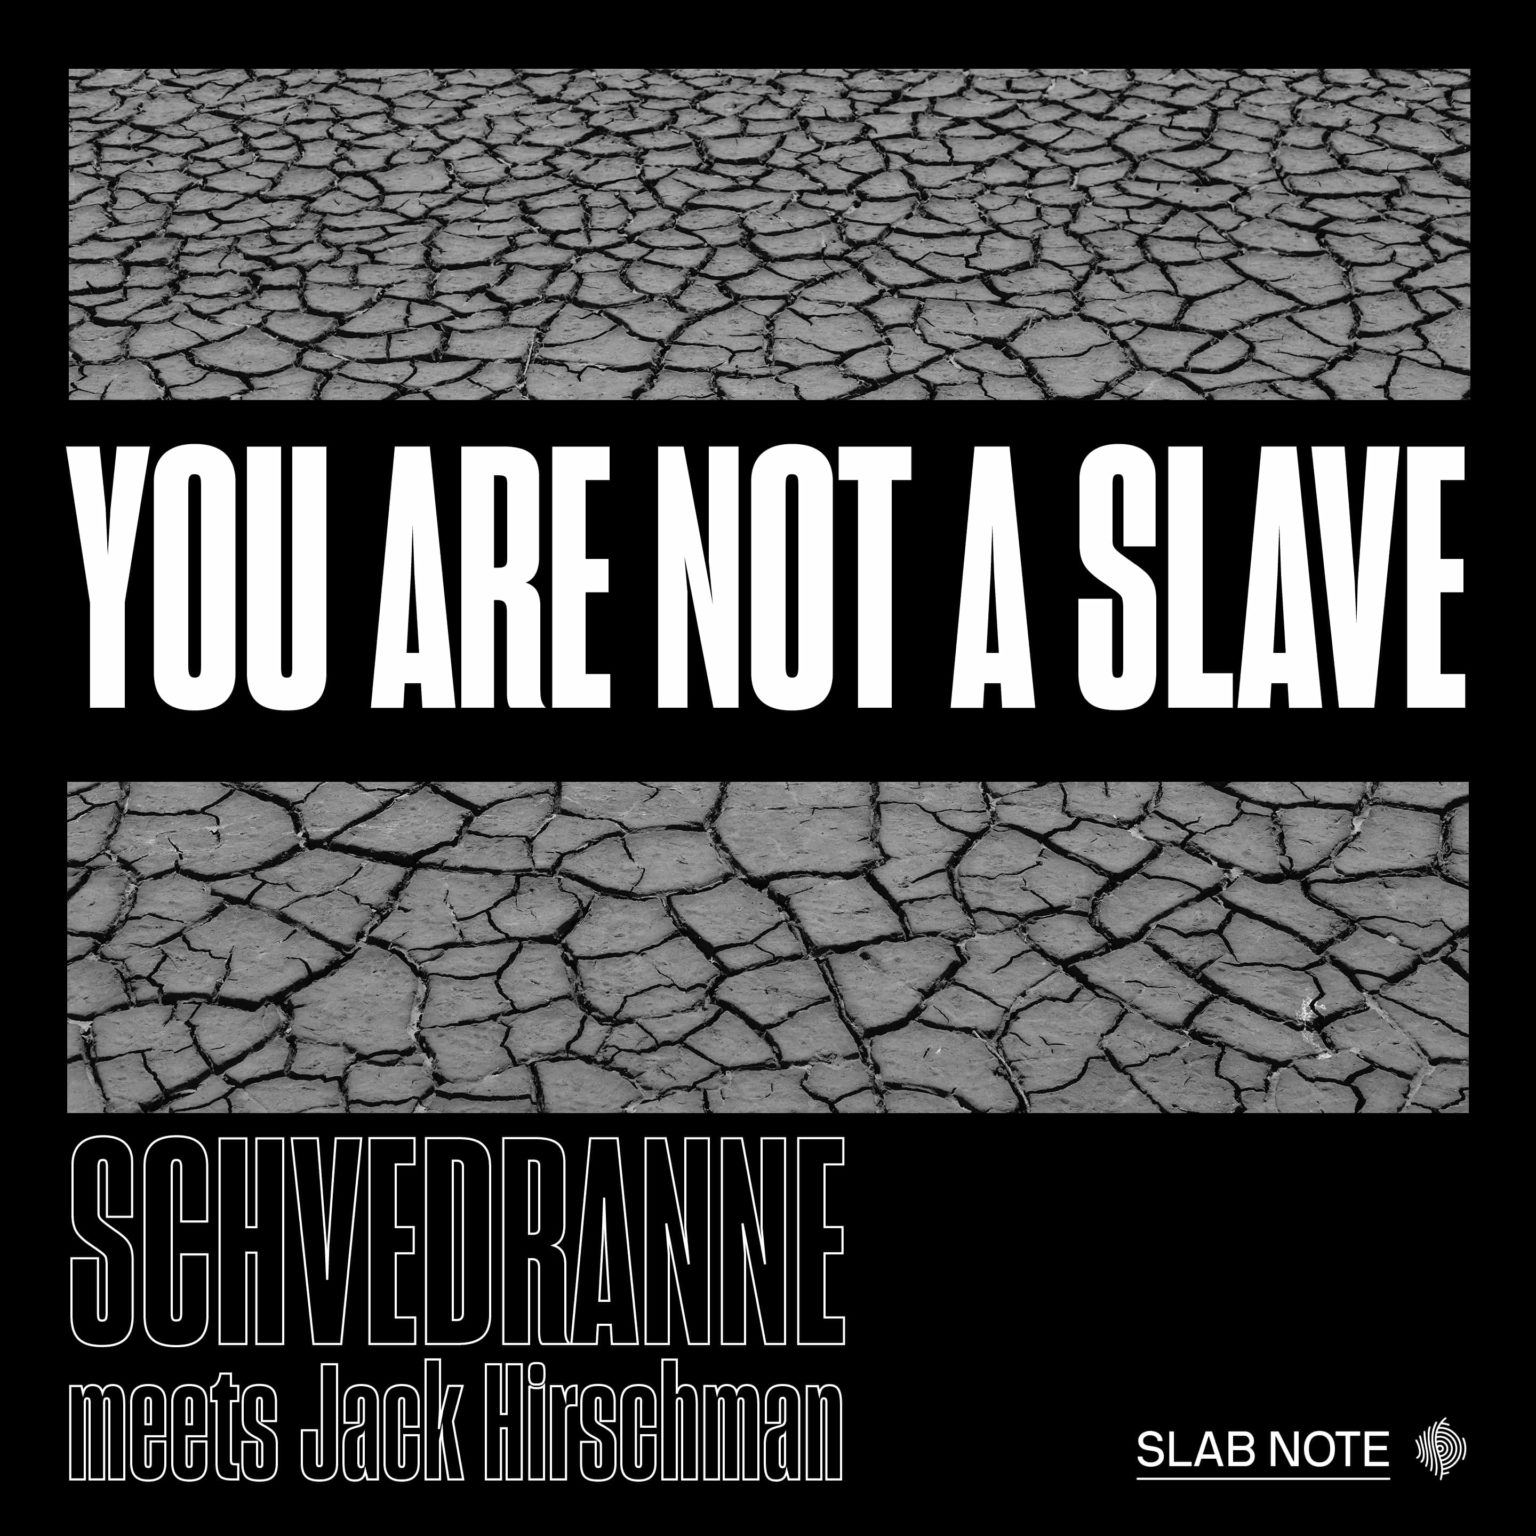 Jarring Effects, Slab Note, Schvédranne, You are not a slave, SPRWD Agency